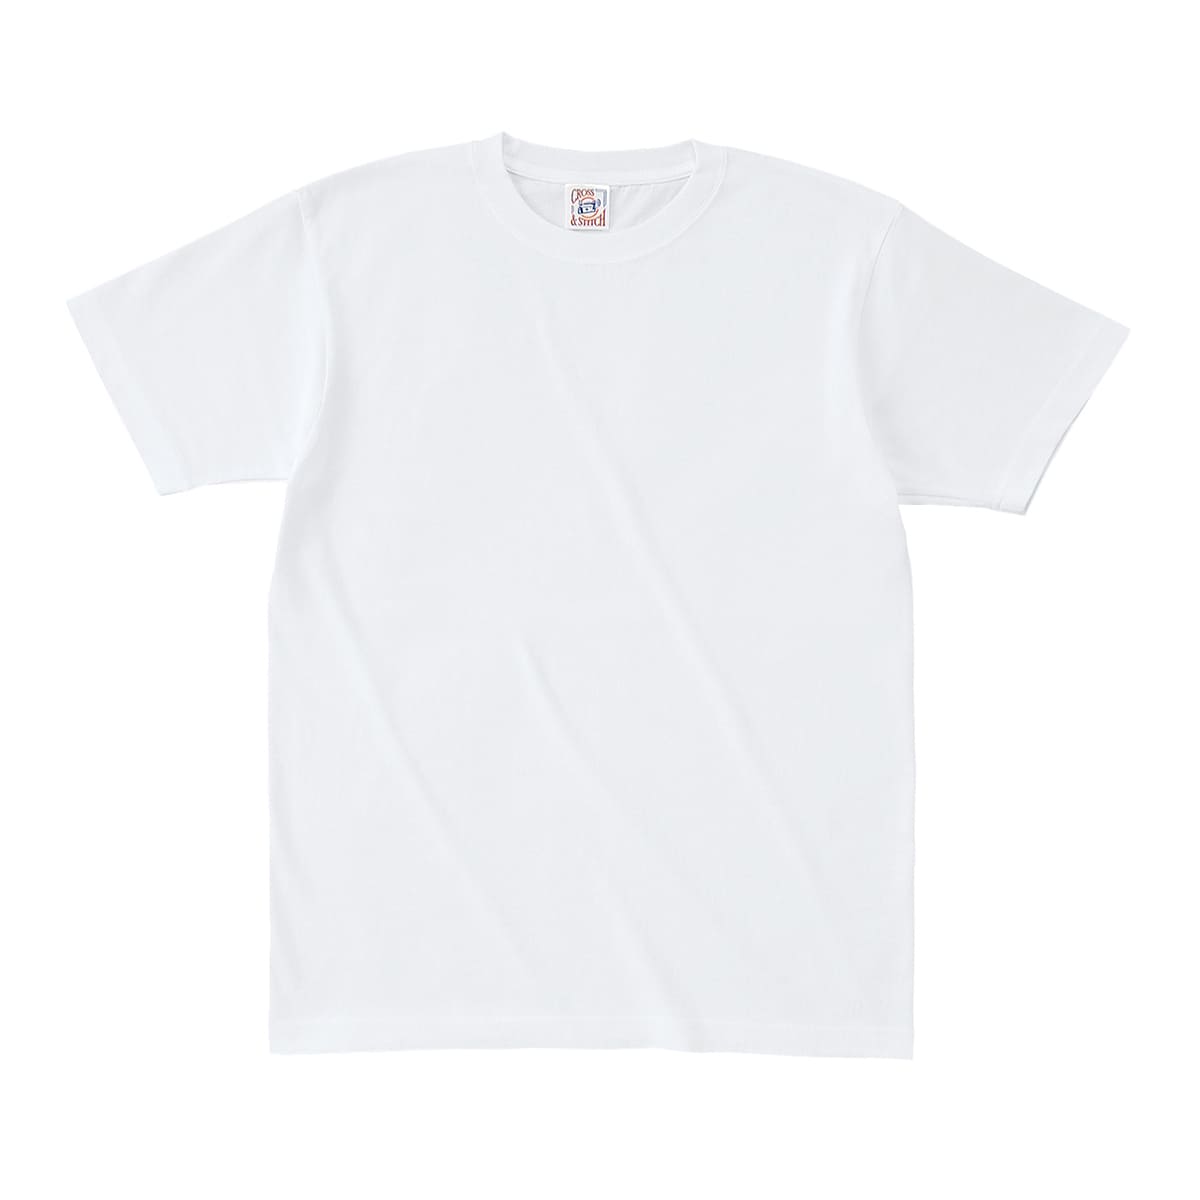 Tシャツ メンズ 無地 厚手 白 黒 など CROSS STITCH(クロスステッチ) 6.2オンス...